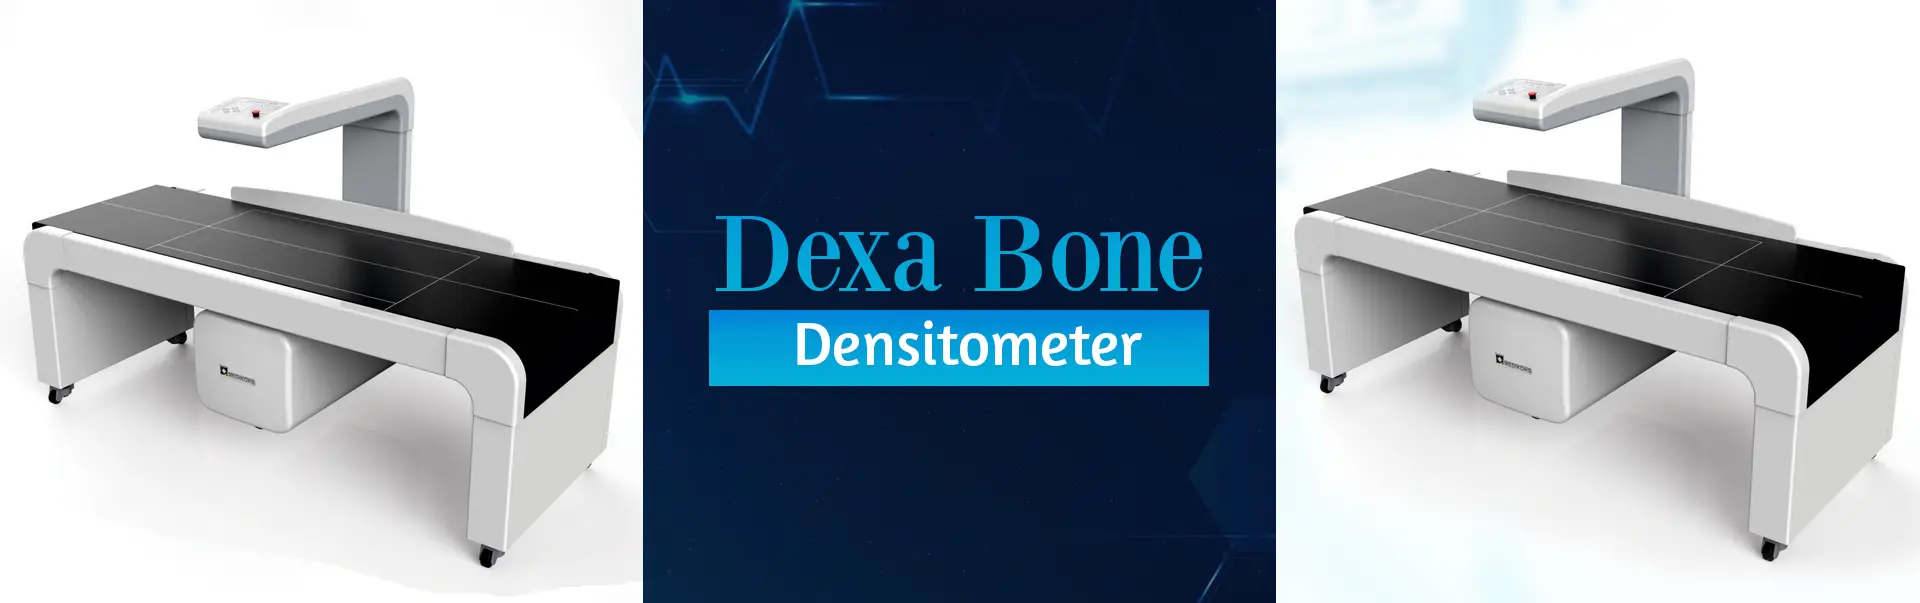 Dexa Bone Densitometer Manufacturers in Bilaspur